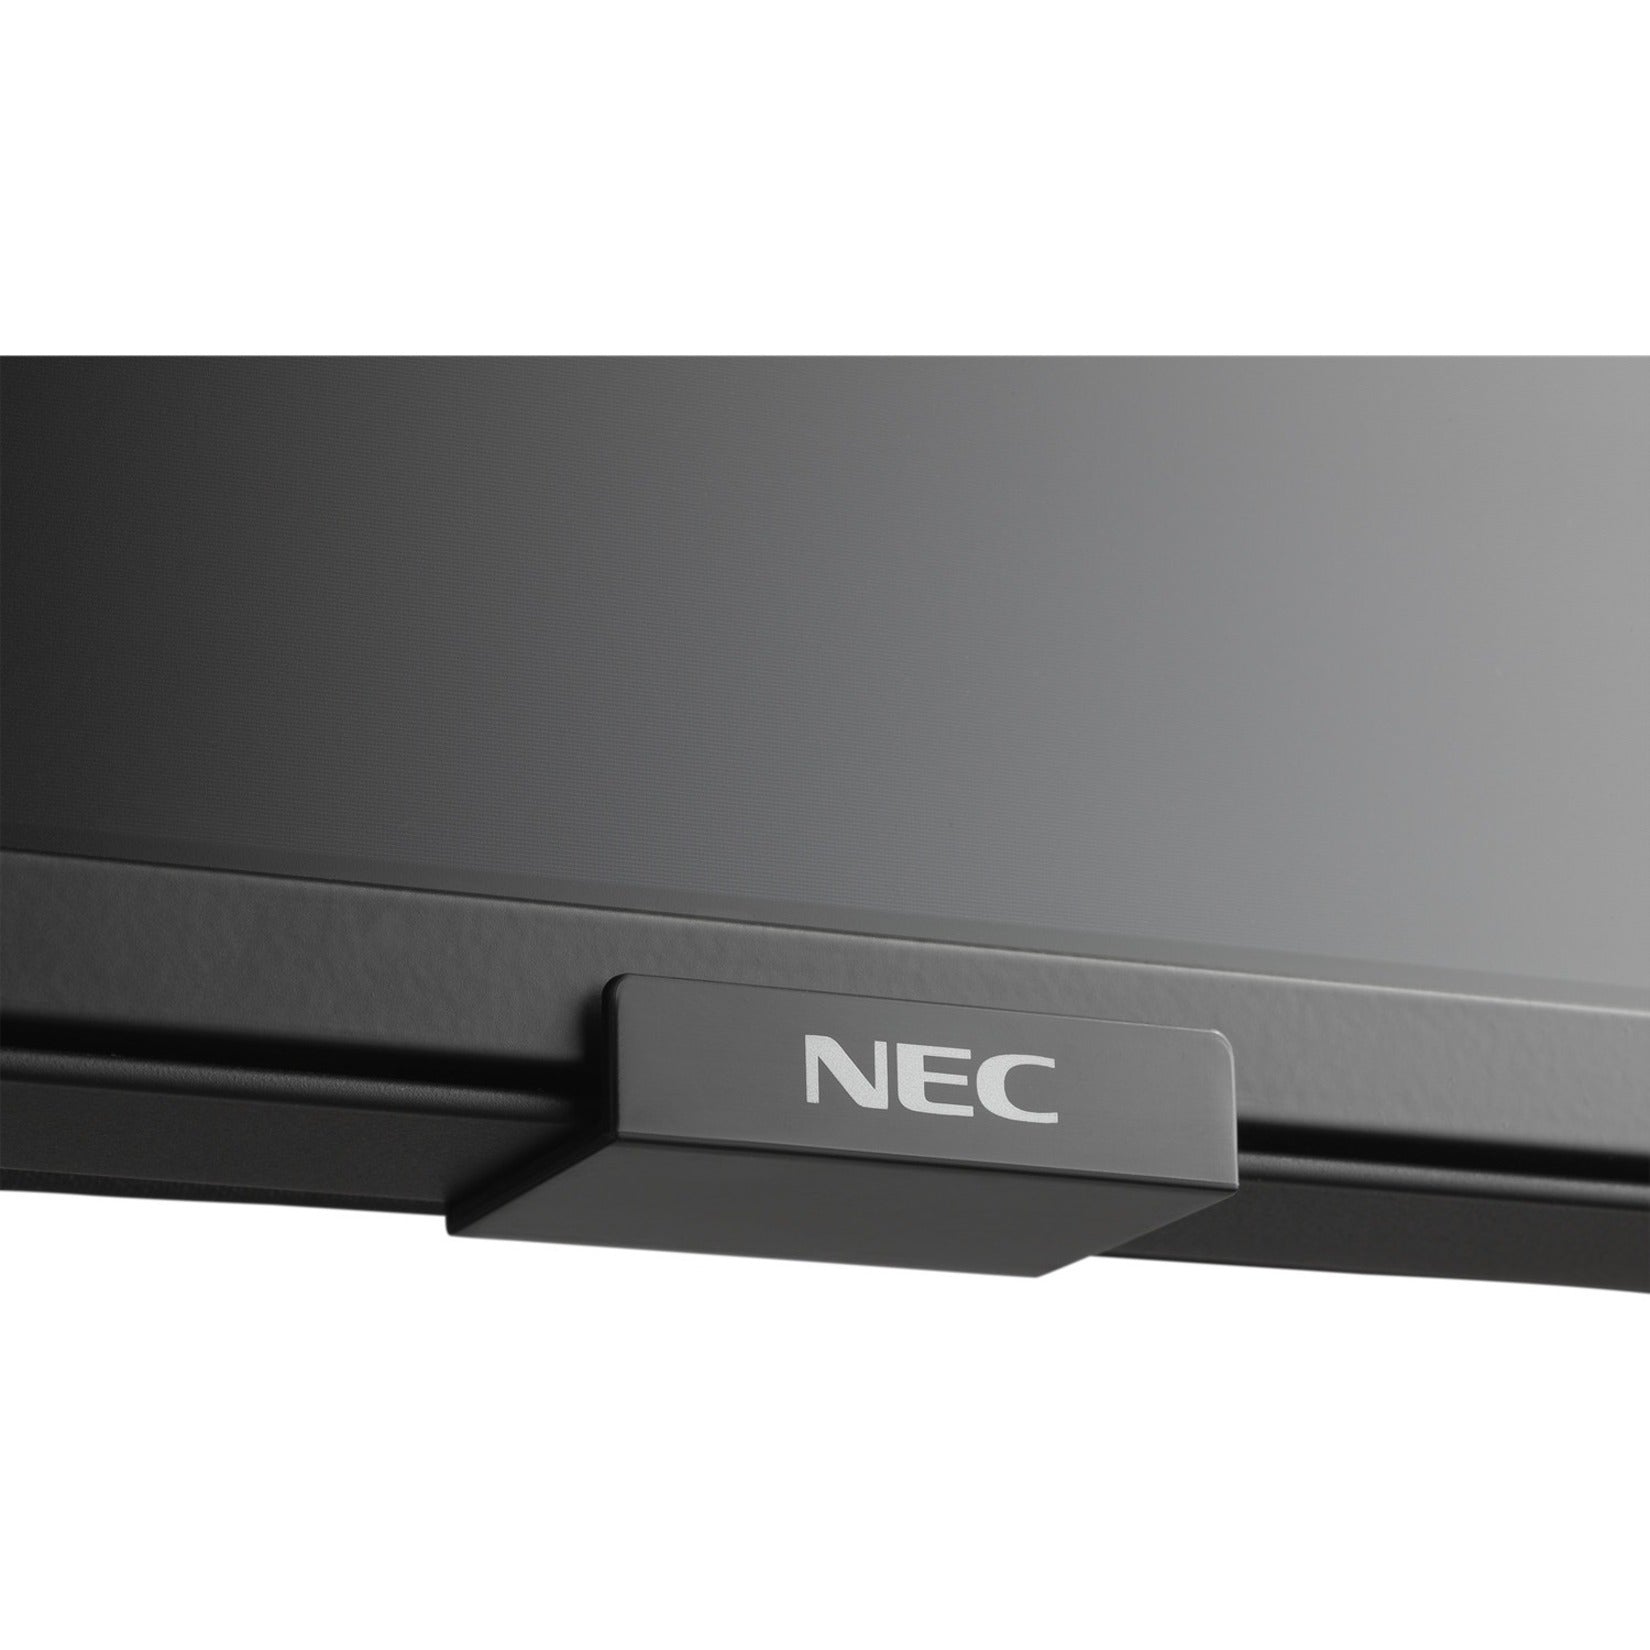 Sharp NEC Display MA551-MPI4E Digital Signage Display/Appliance, 55" 4K HDR Edge LED, 500 Nit, 10-bit Color Depth, 86% DCI Color Gamut